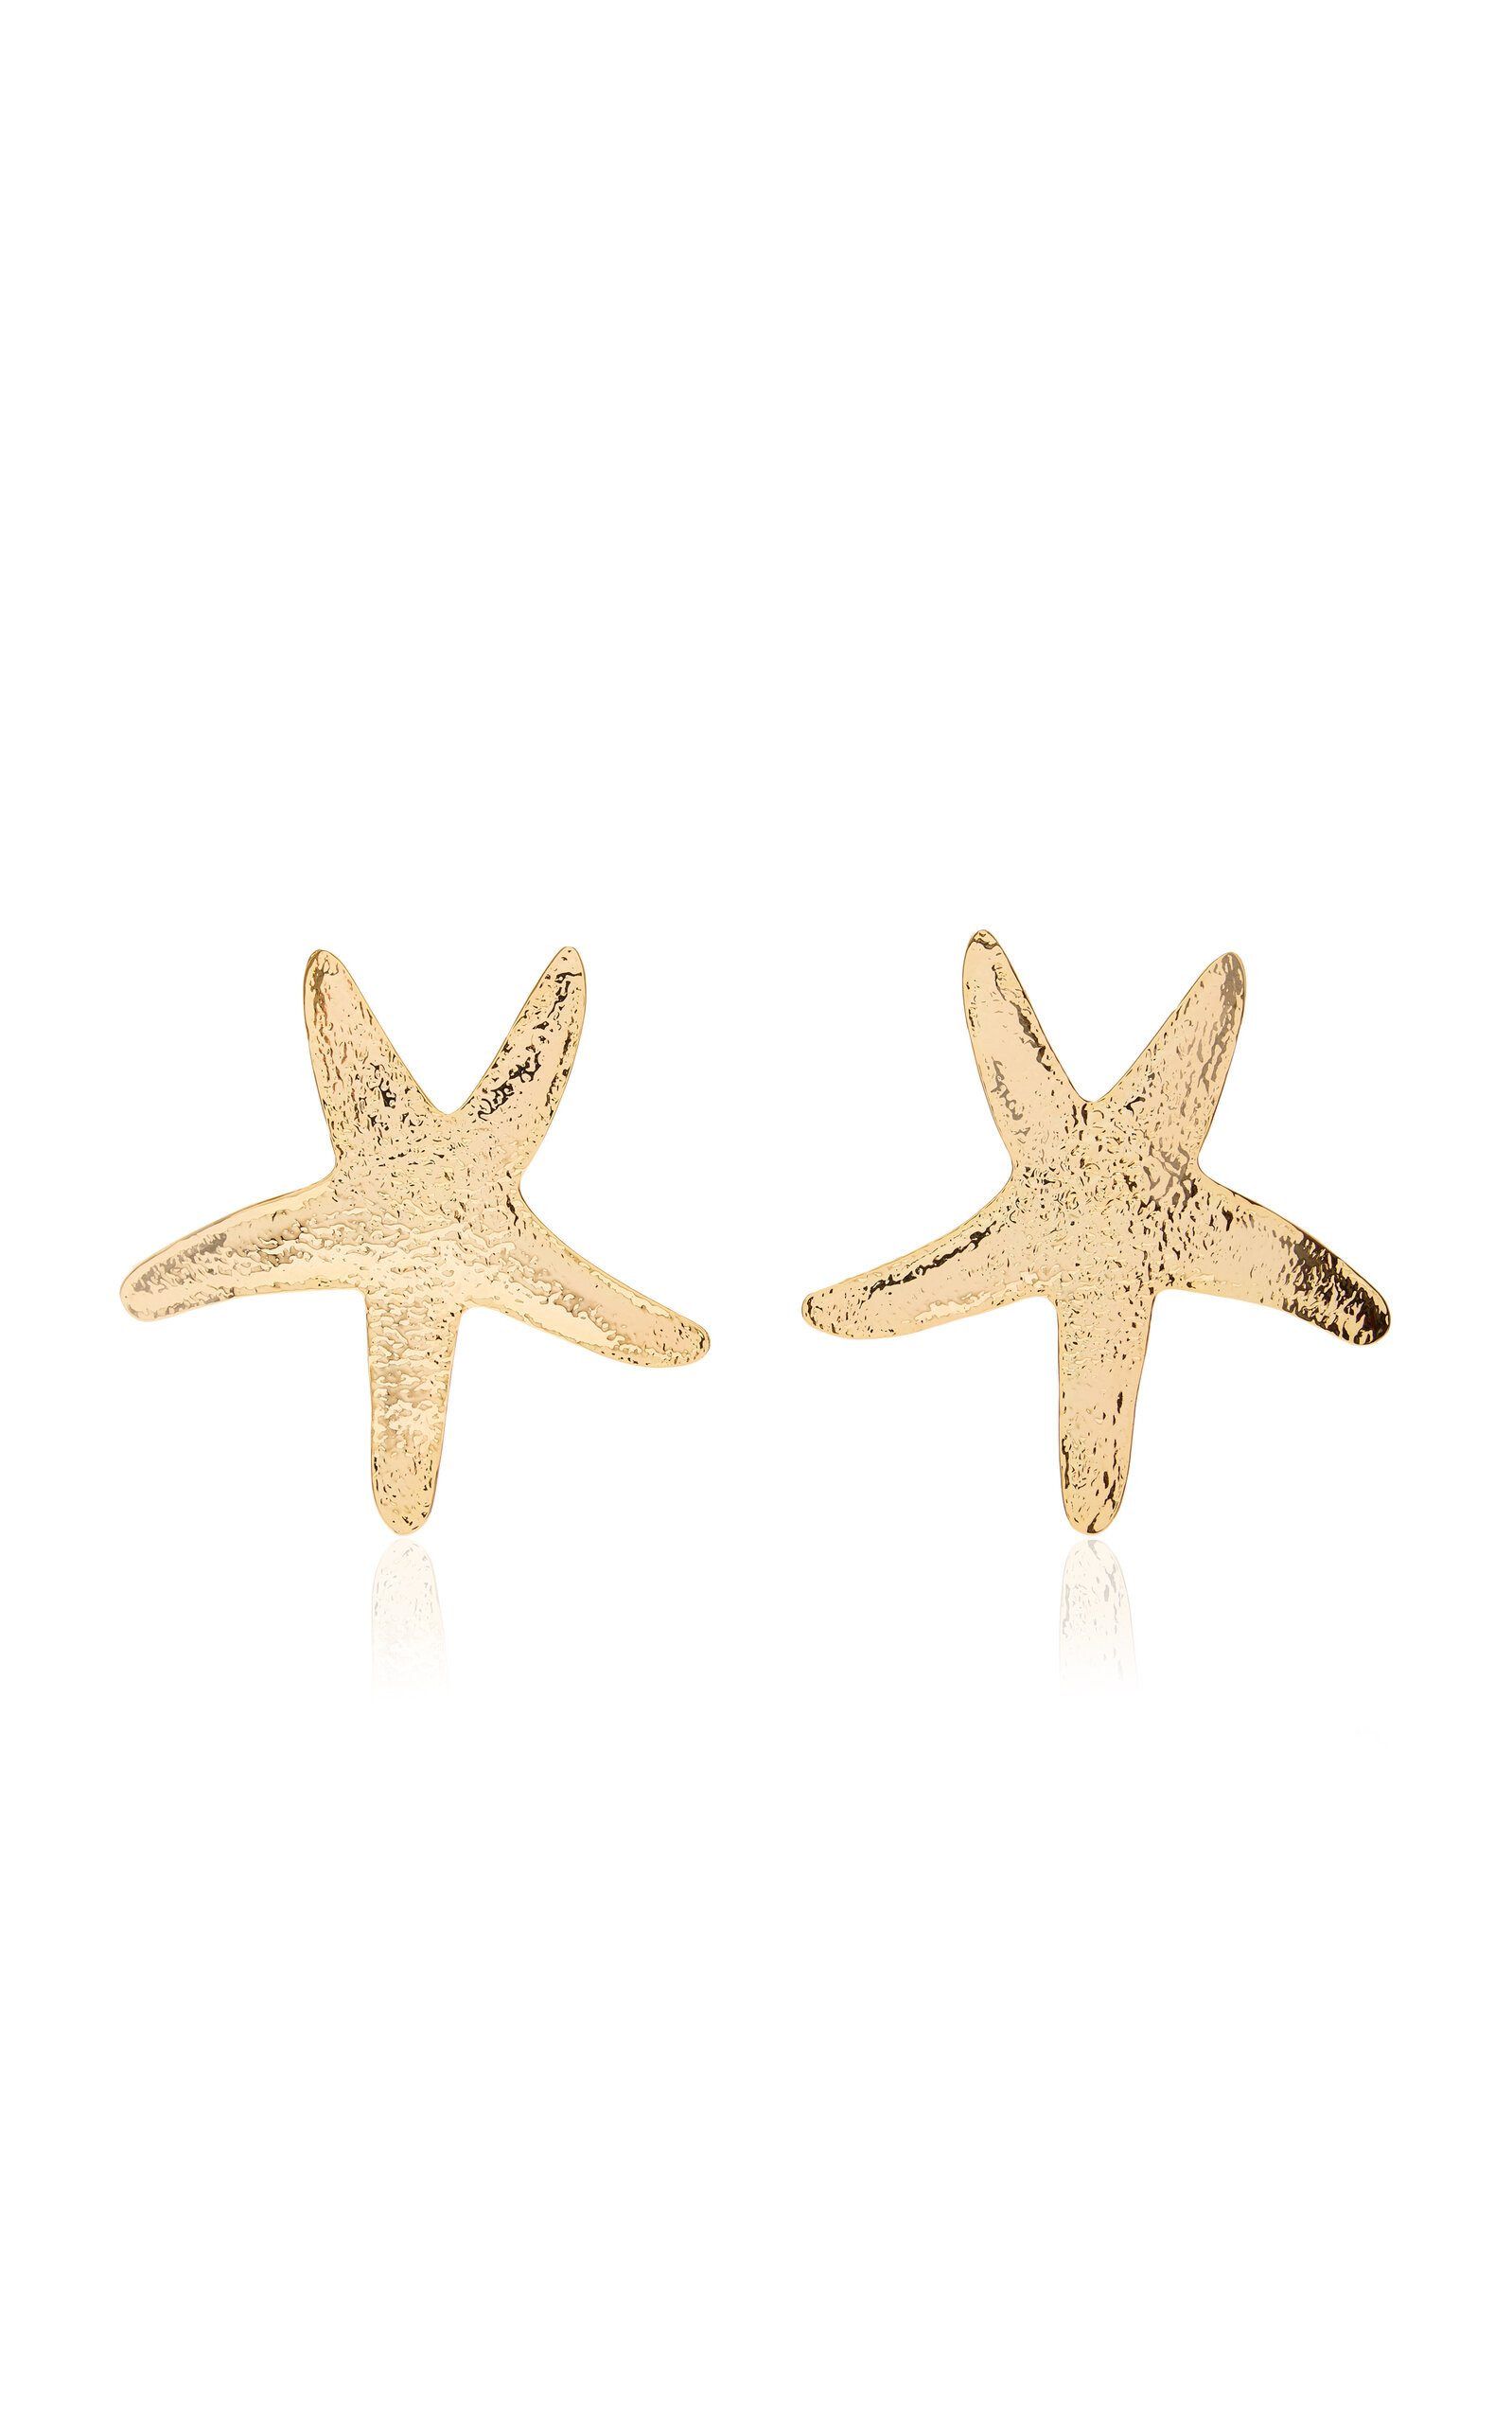 Cult Gaia - Ariel Starfish Brass Ear Cuffs - Gold - OS - Moda Operandi - Gifts For Her